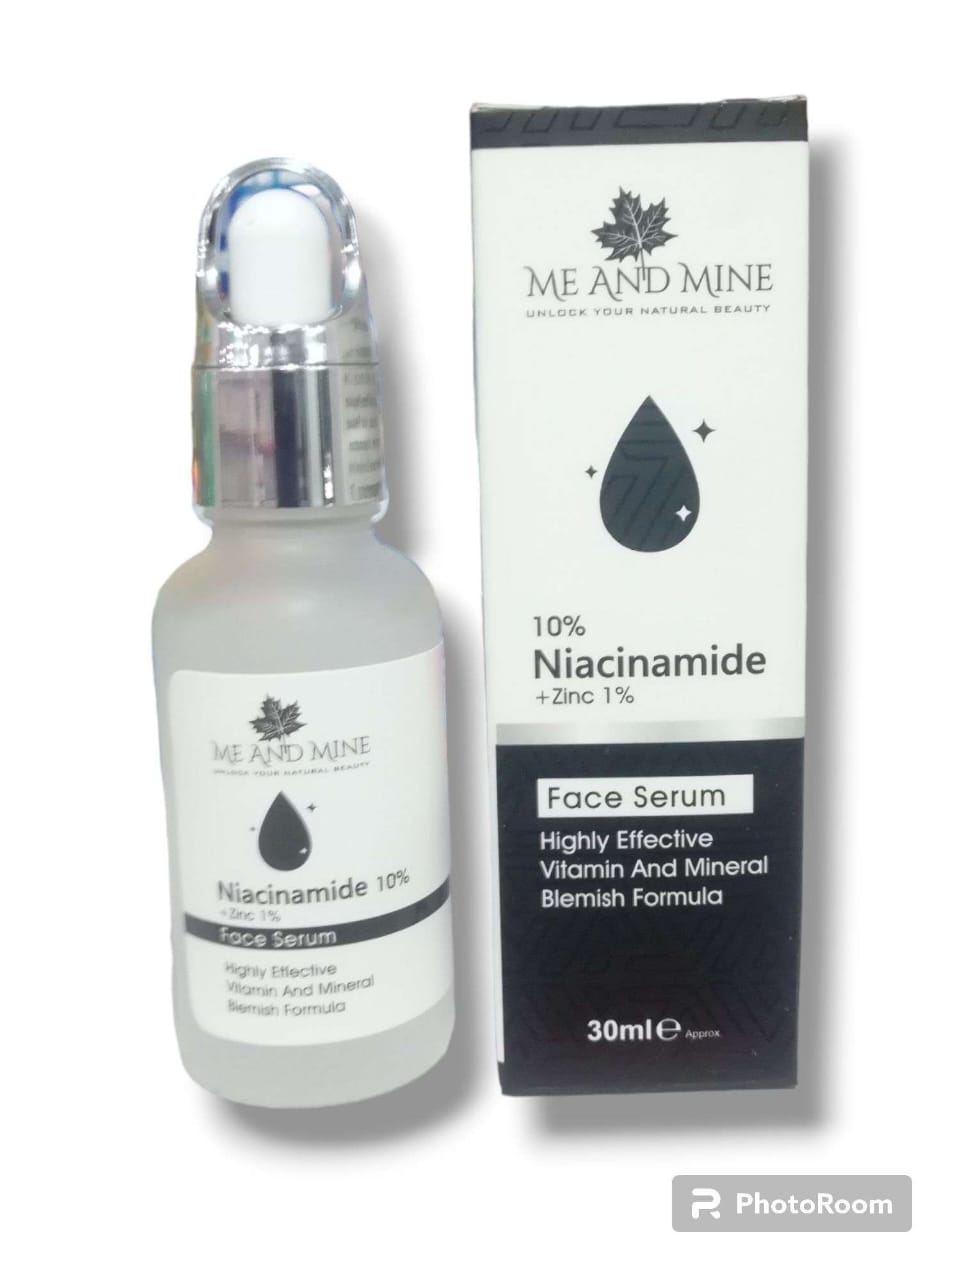 Me and mine ordinary Niacinamide face serum 10% + Zinc 1%